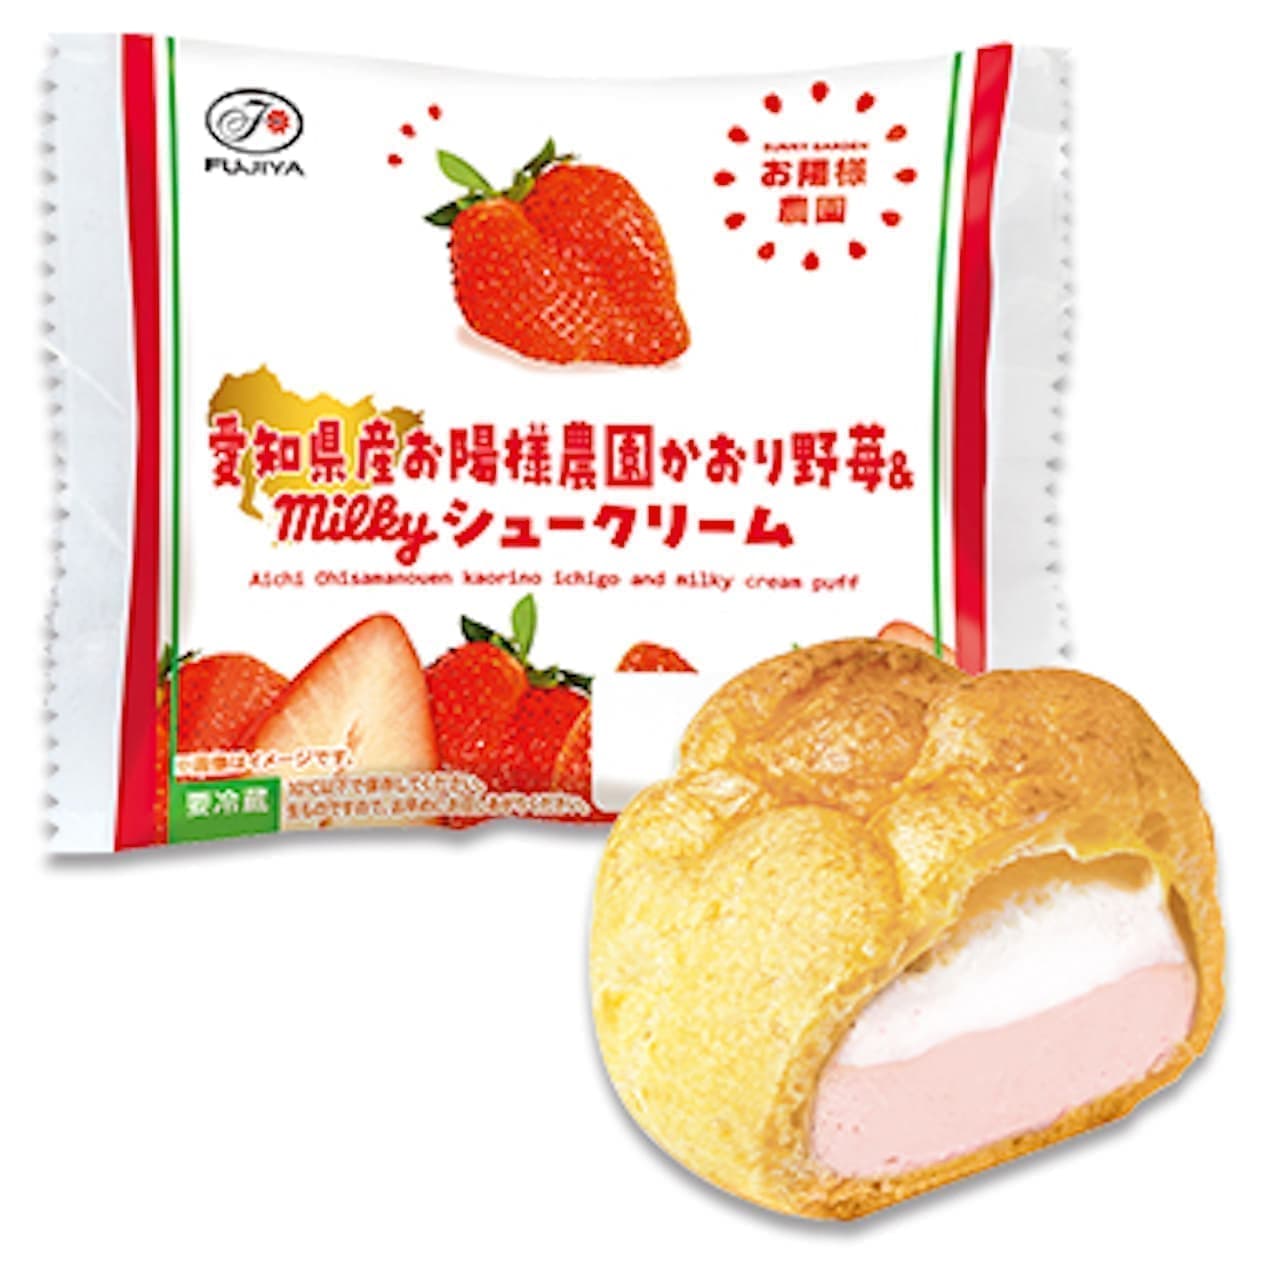 Fujiya New Cake "Kiln-baked Double Cream Puff (Aichi Oyasama Farm Kaorino Strawberry)".